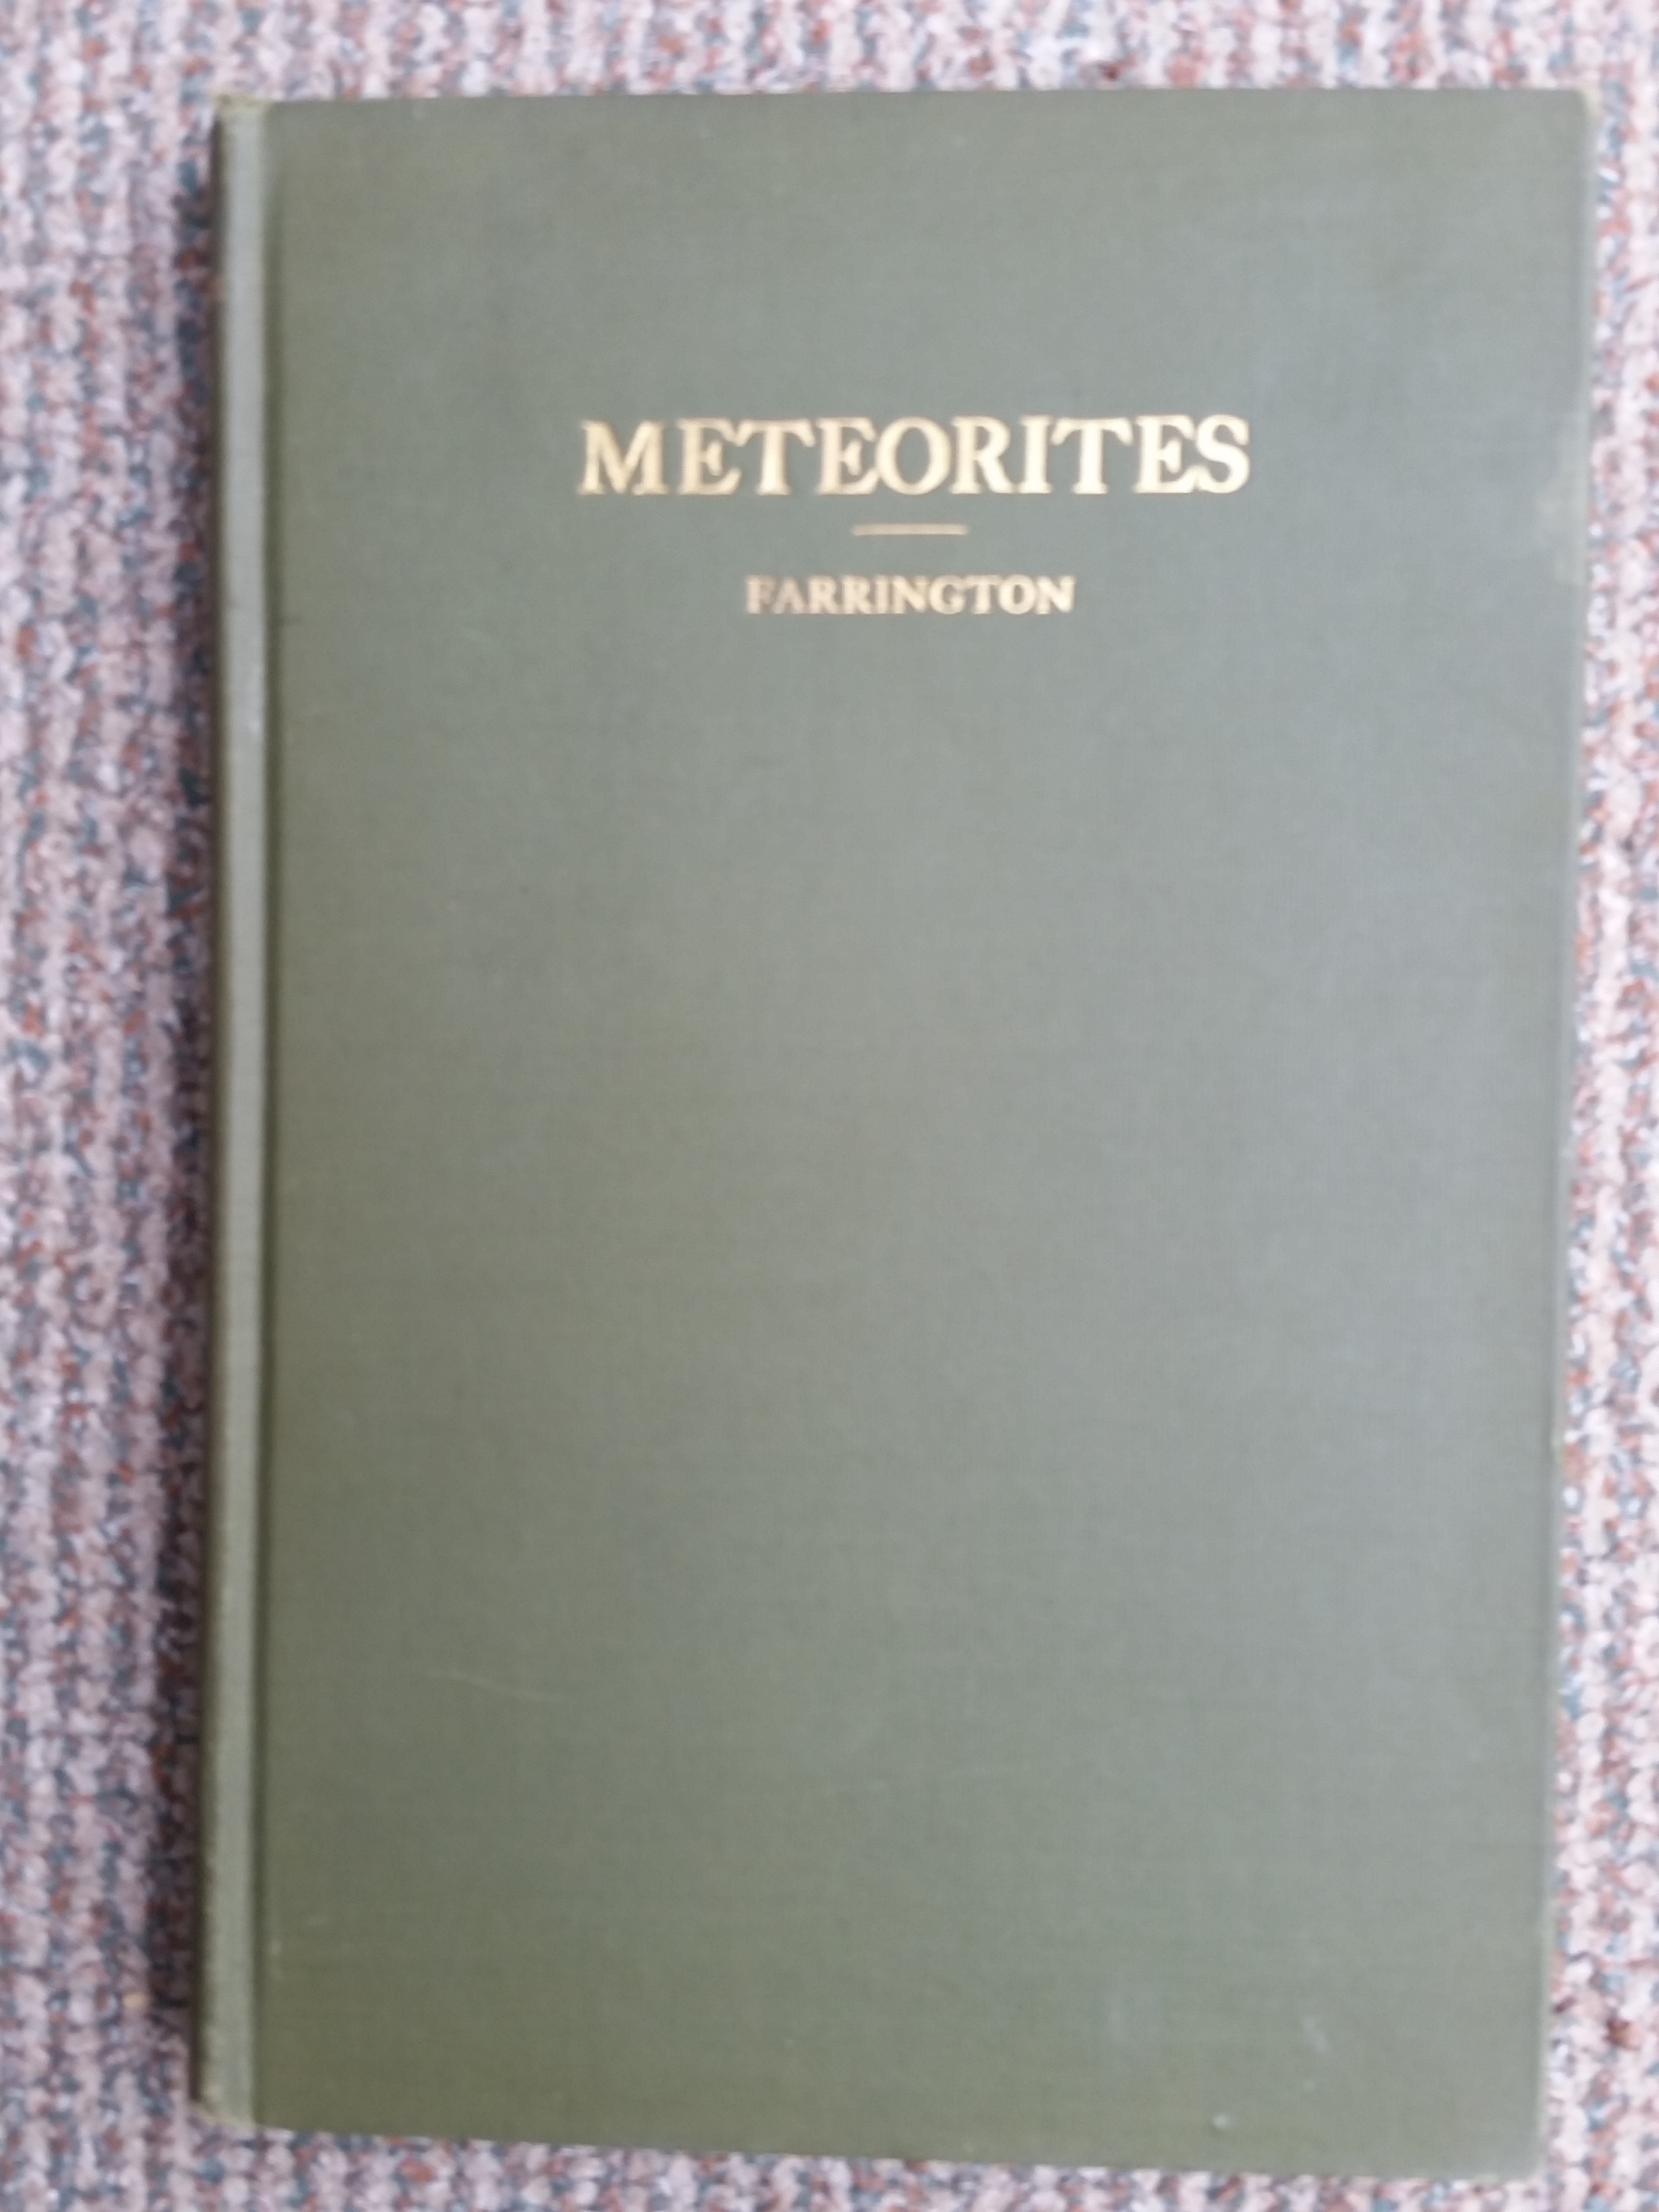 Farrington's Meteorites